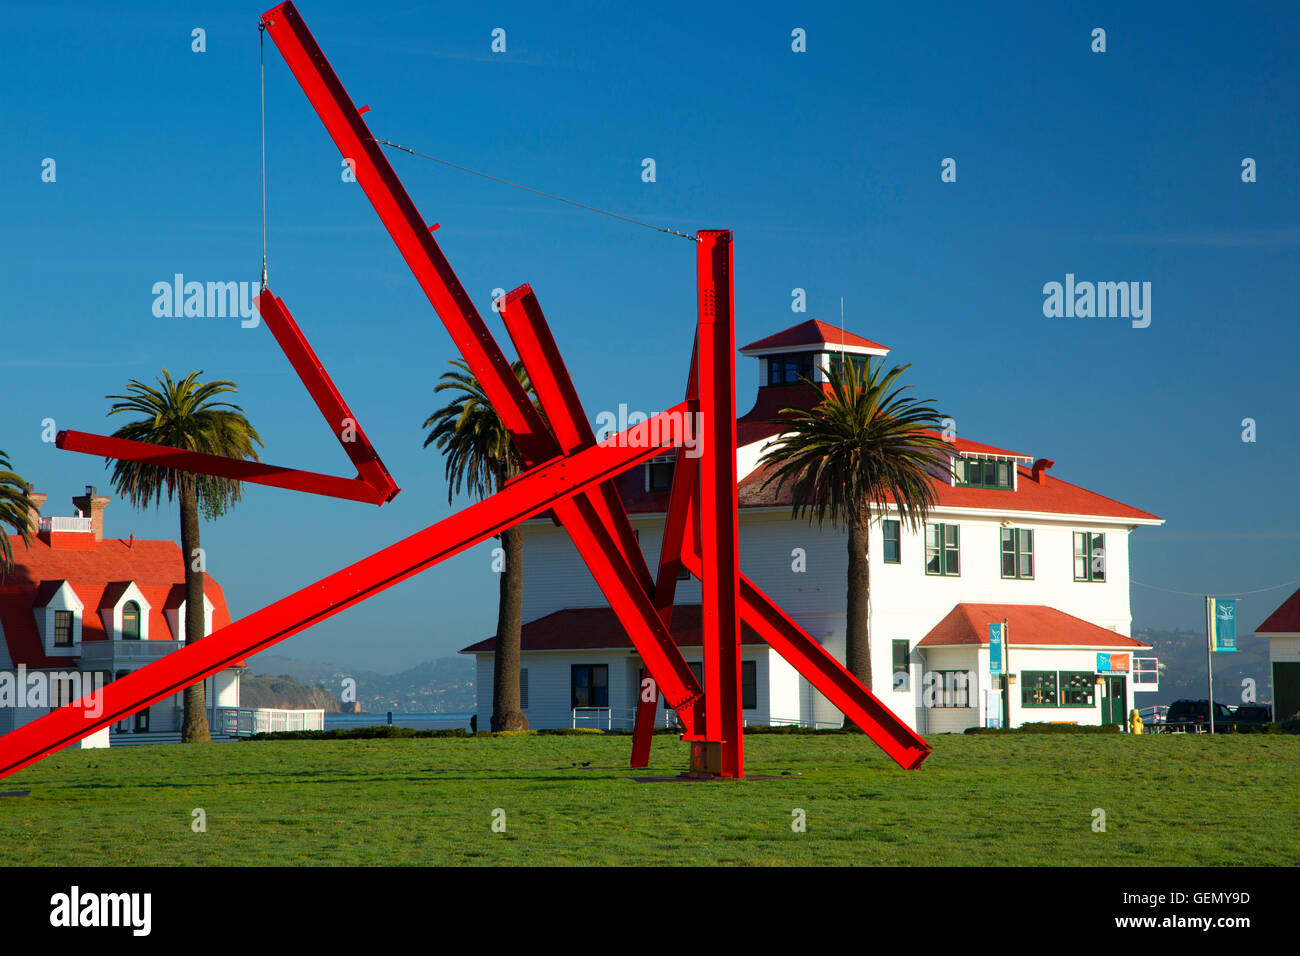 Mark di Suvero sculpture (2014) at Crissy Field, Presidio of San Francisco, San Francisco, California Stock Photo